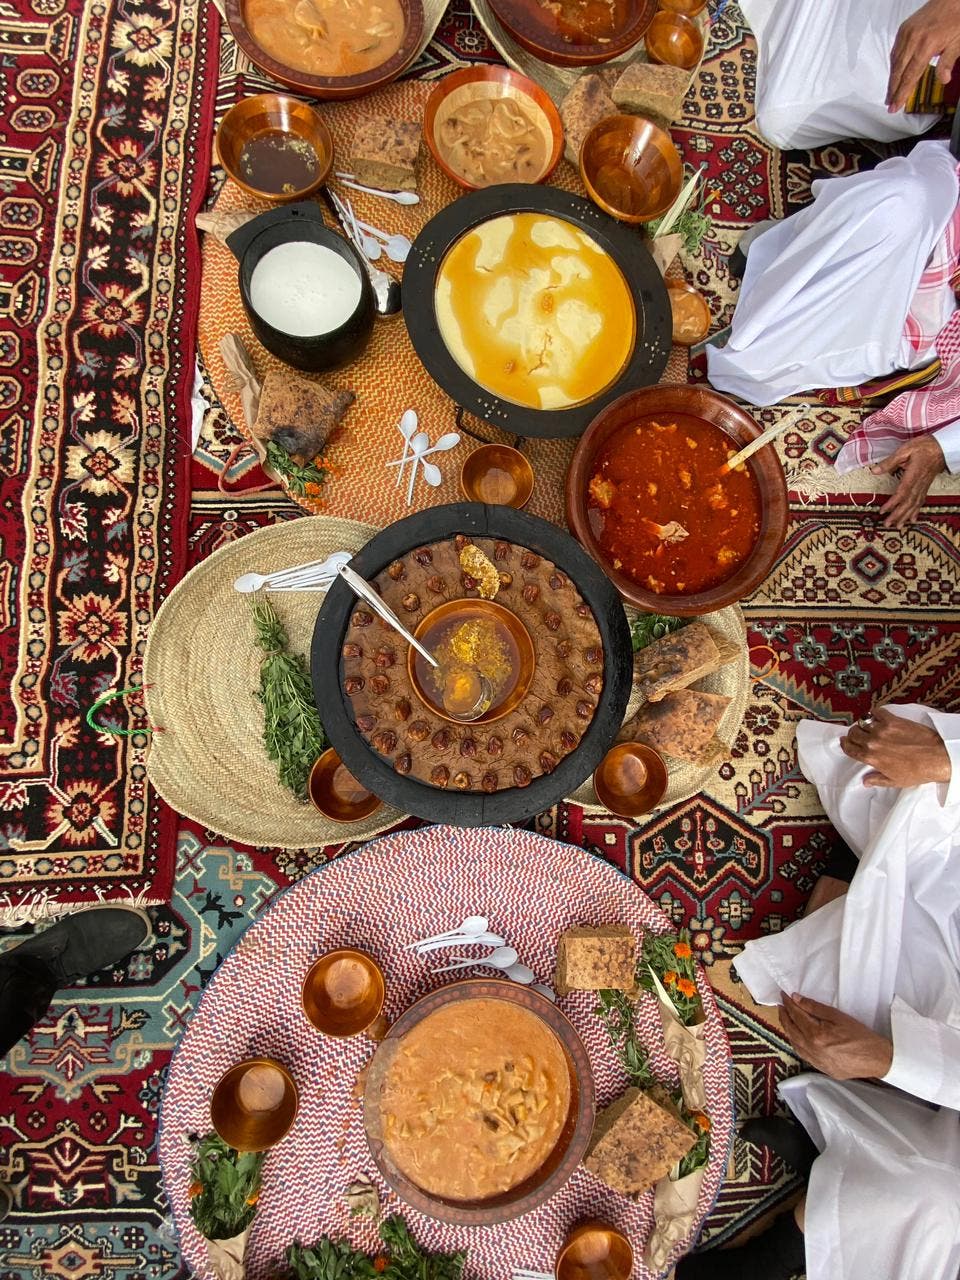 Southern Folk Food (Photo: Emad Al-Zahrani)